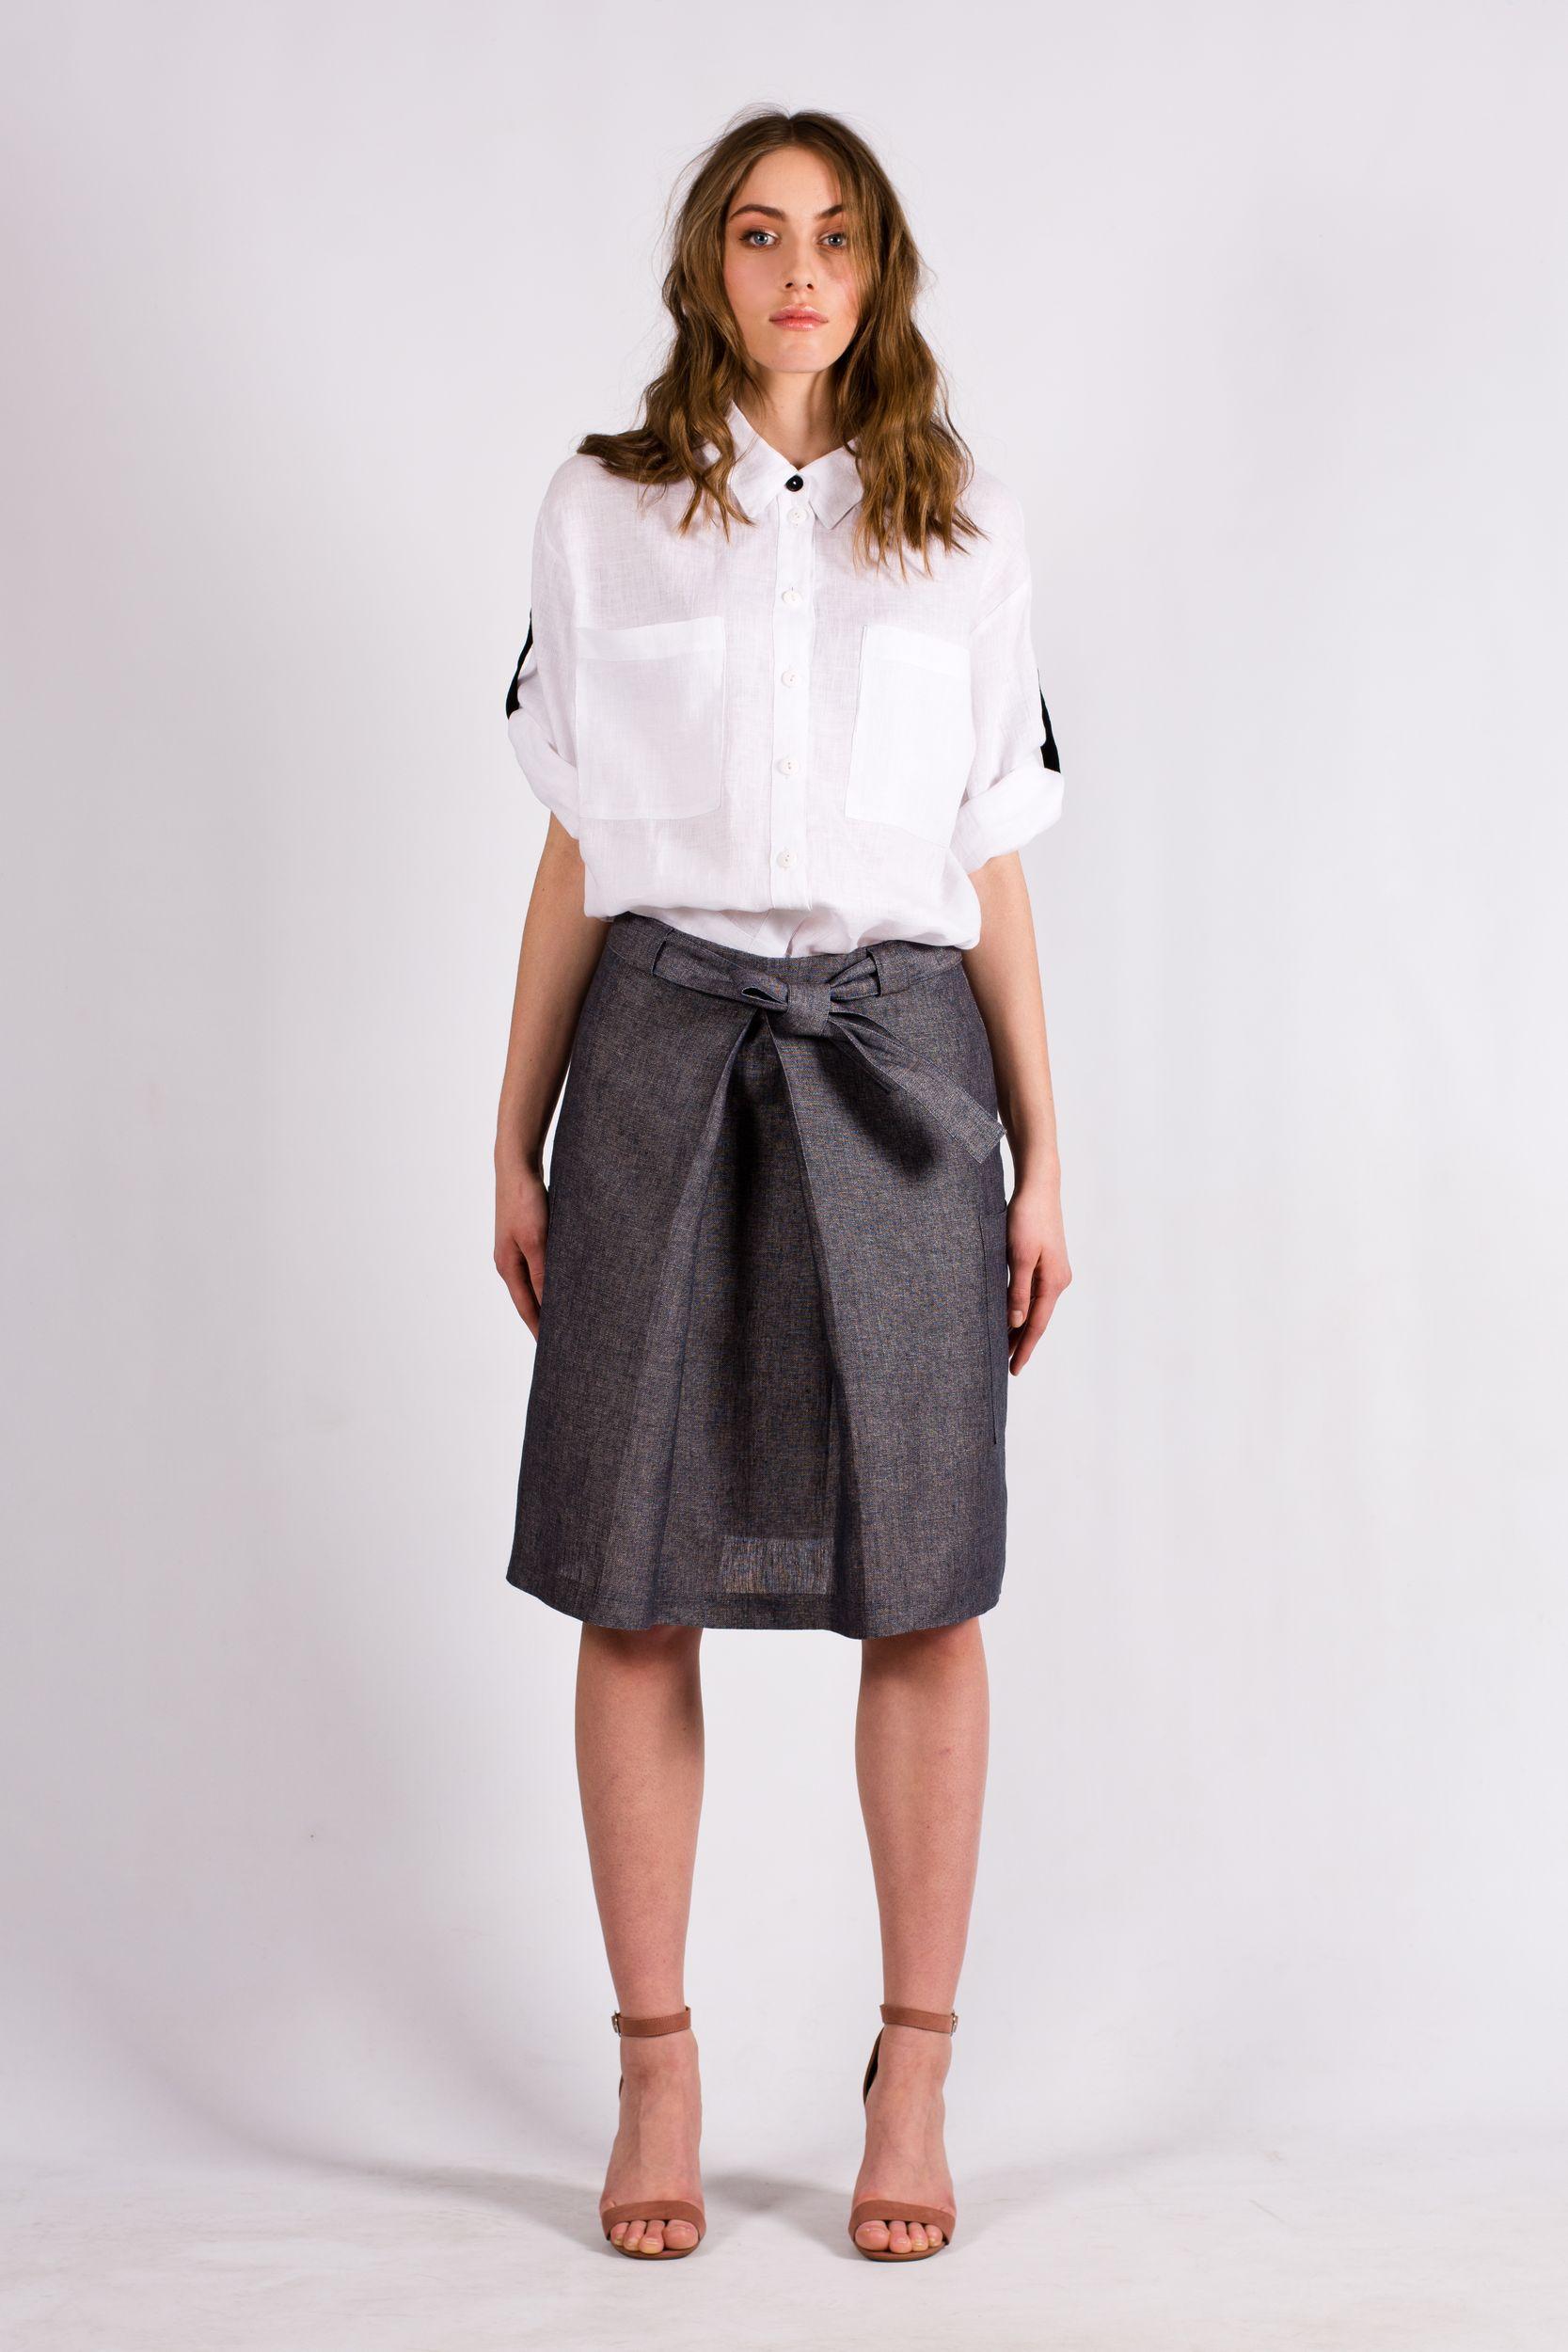 Grey linen skirt